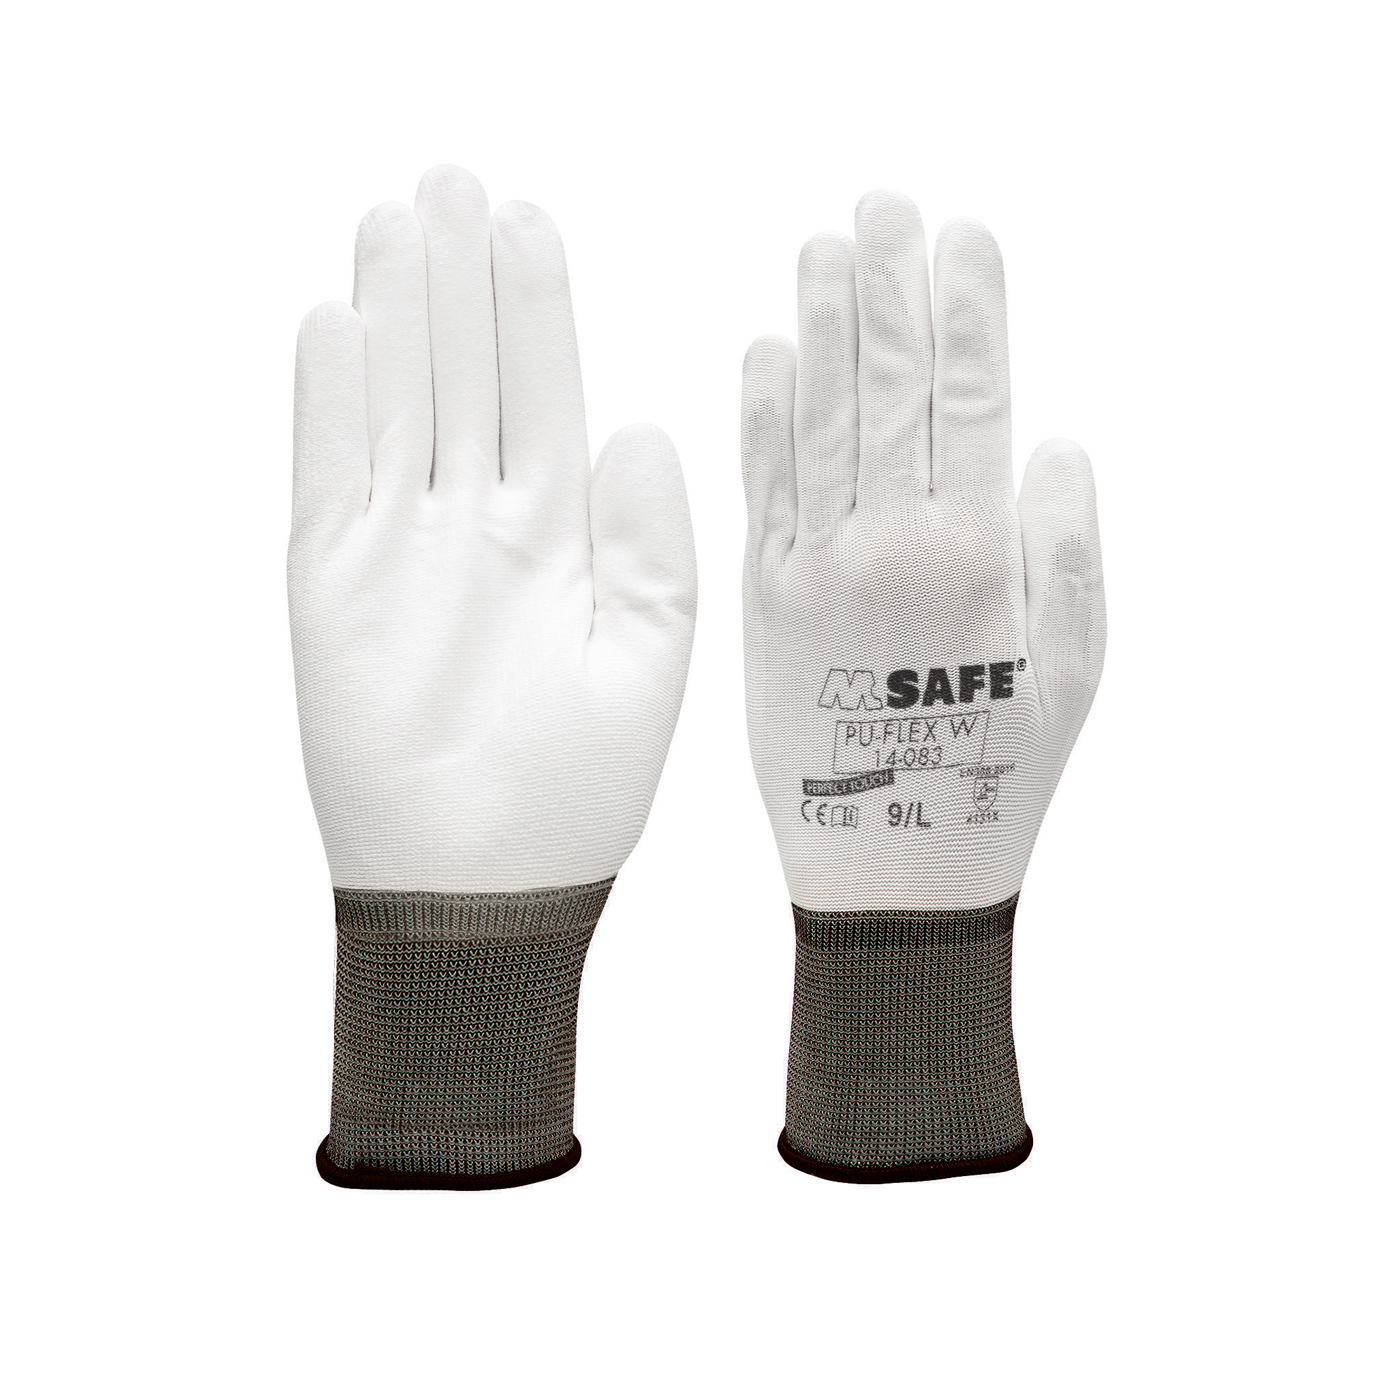 Polishing Gloves, Size XL, White with black Wristband - 1 pair